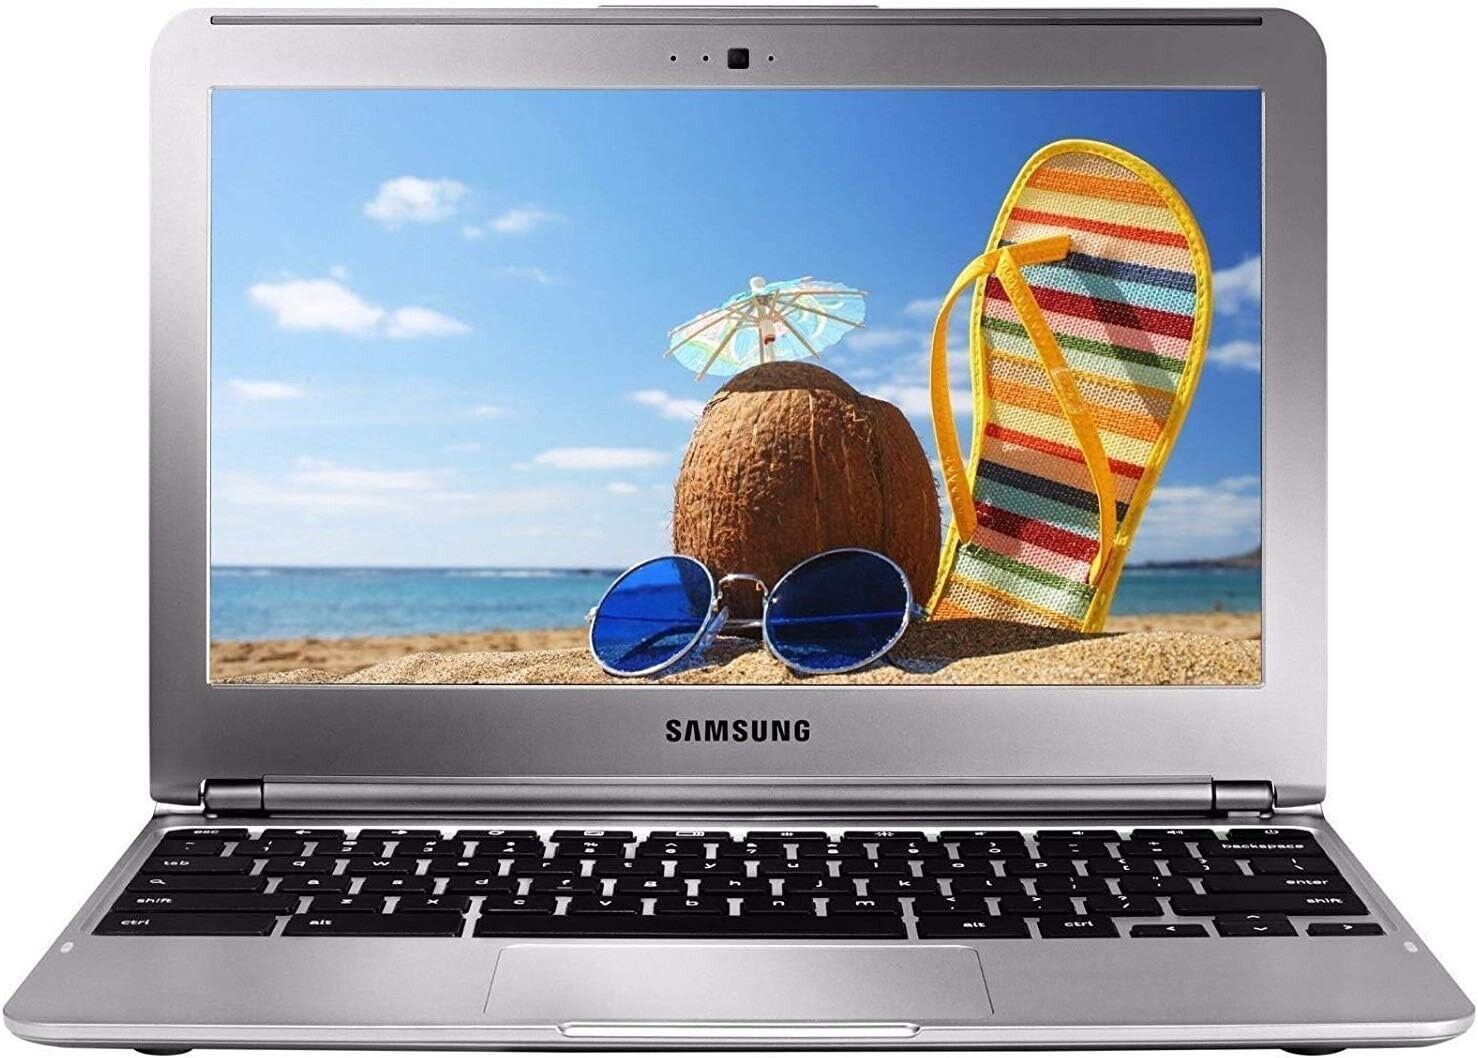 Samsung Laptop Chromebook XE303C12-A01US, Dual-Core 1.7GHz 4GB 16GB